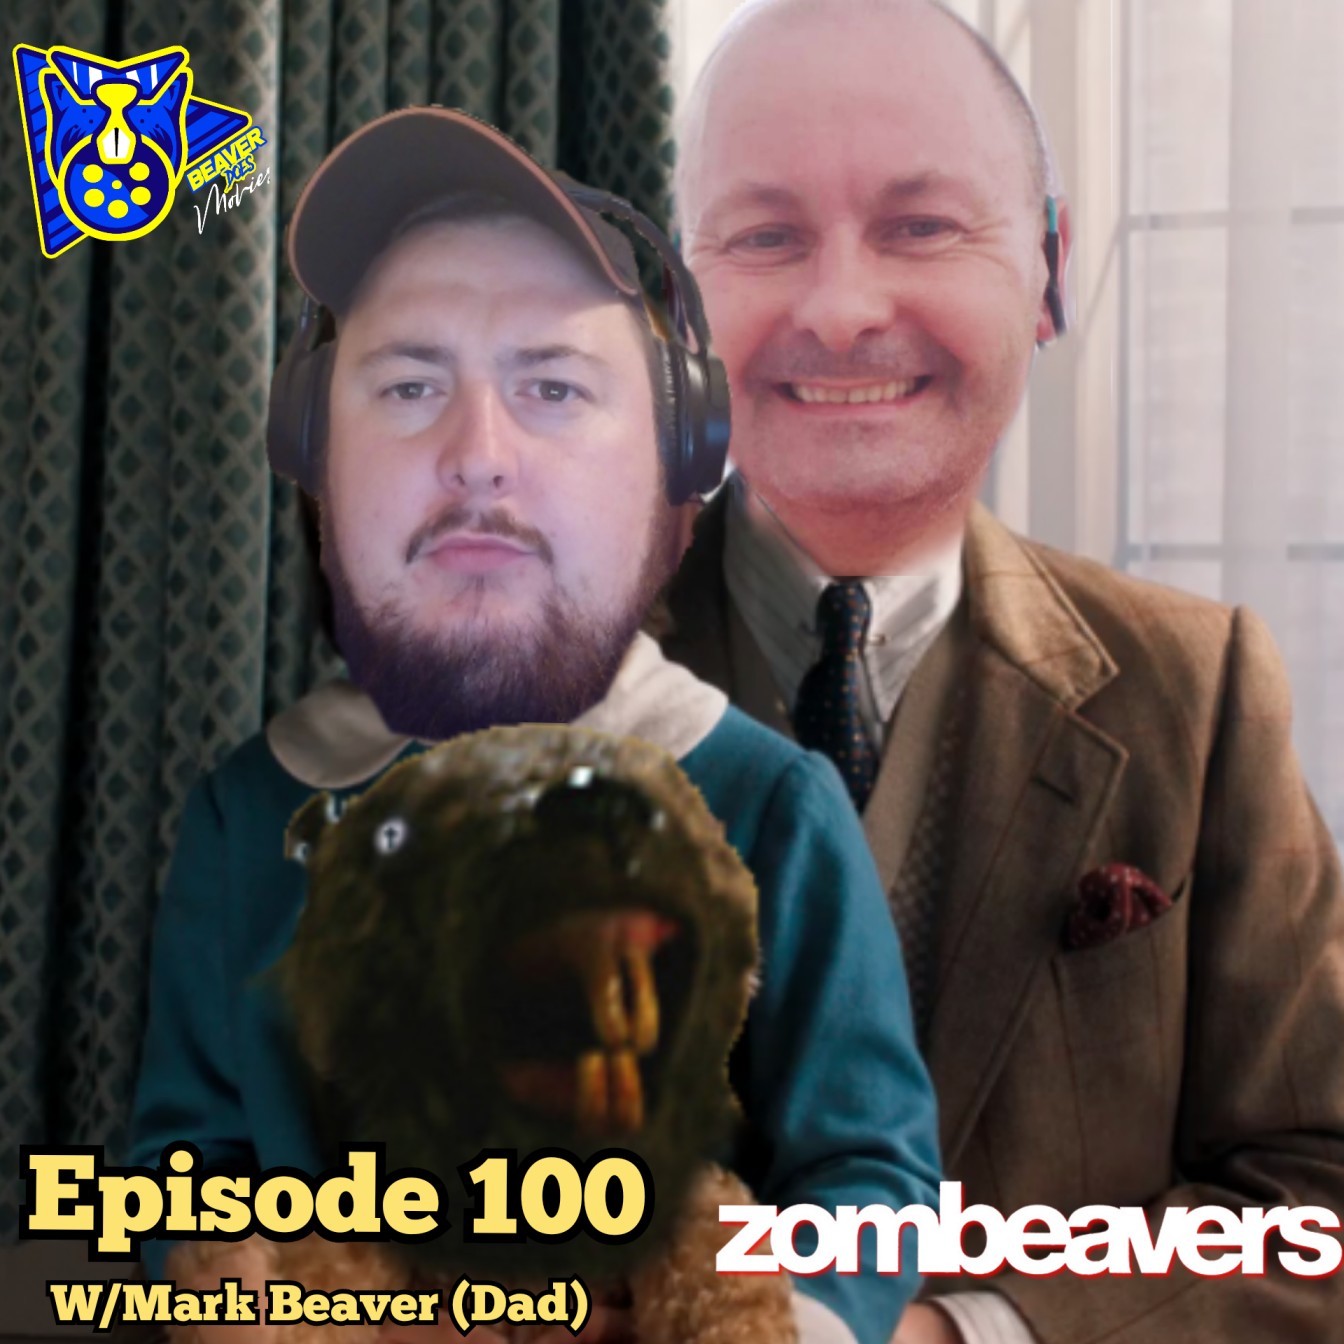 Zombeavers (Episode 100 W/ Mark Beaver (DAD)